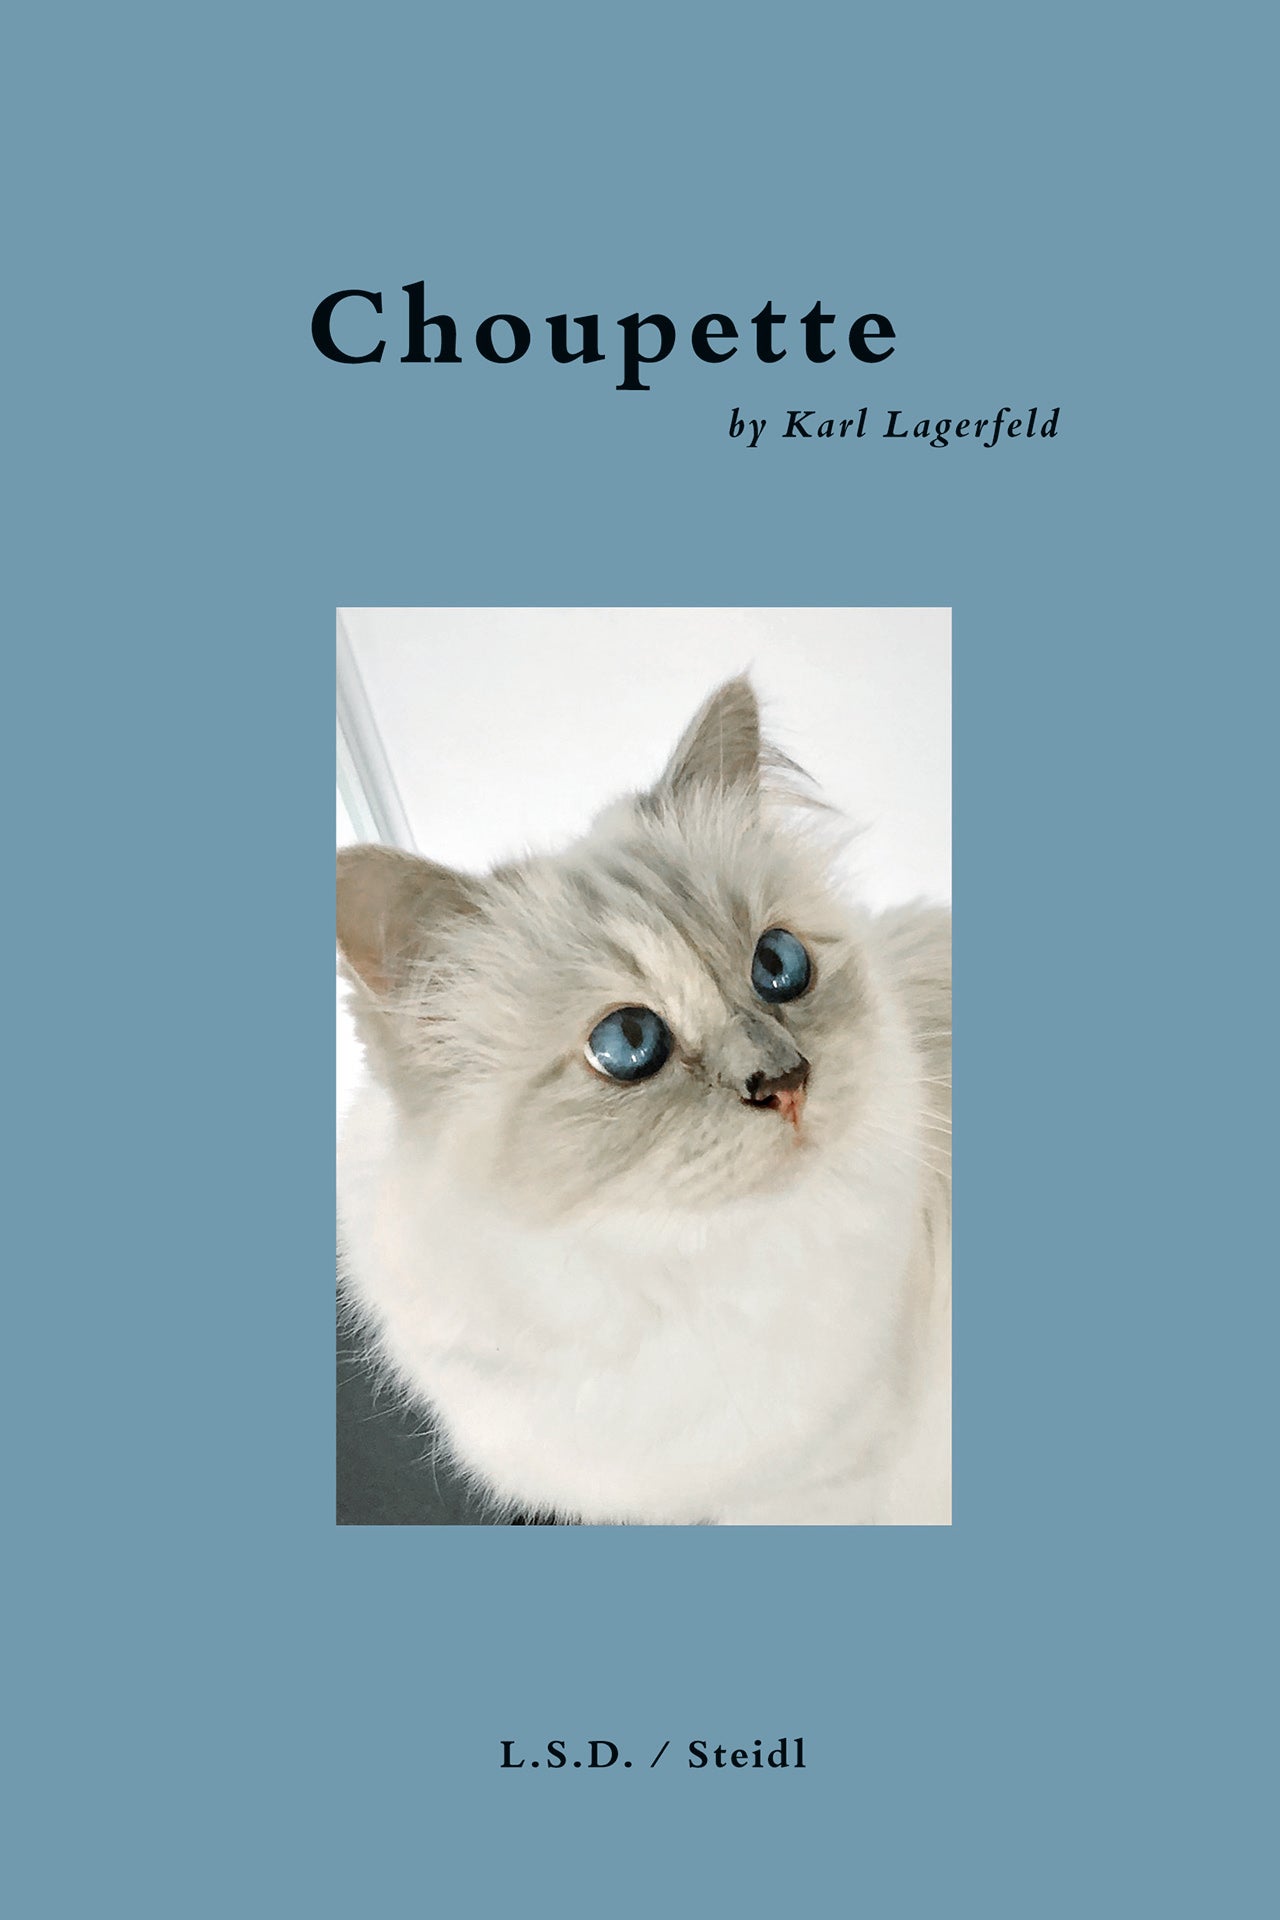 Autor: Choupette by Karl Lagerfeld